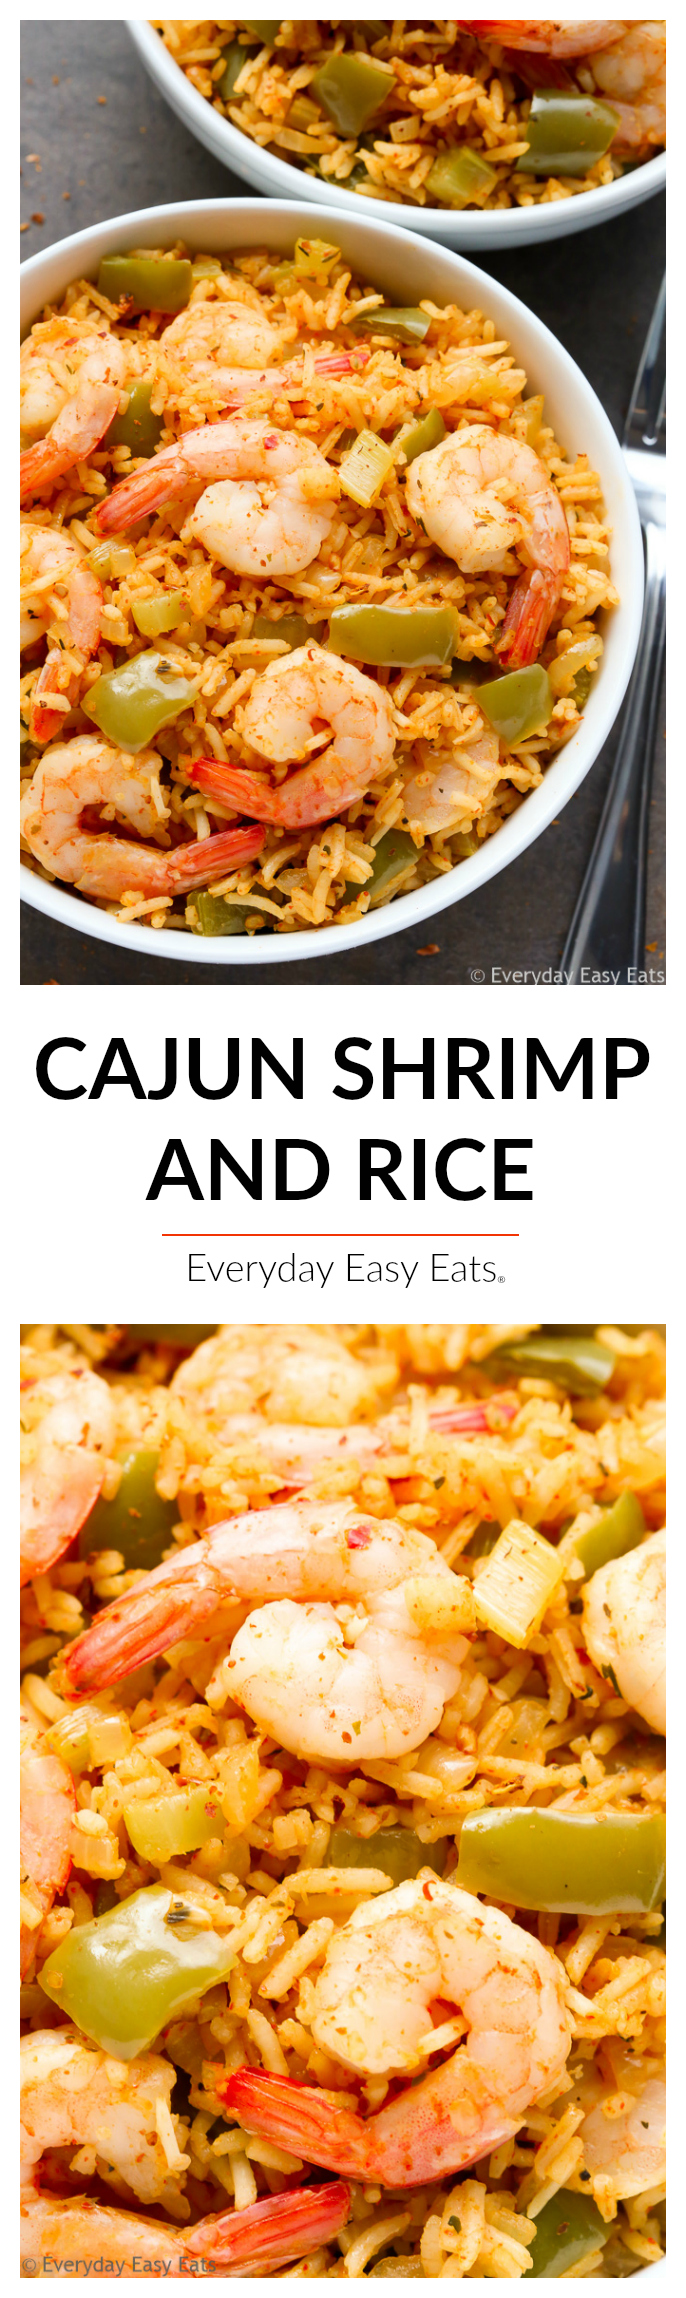 Easy One-Pot Cajun Shrimp and Rice | Recipe at EverydayEasyEats.com